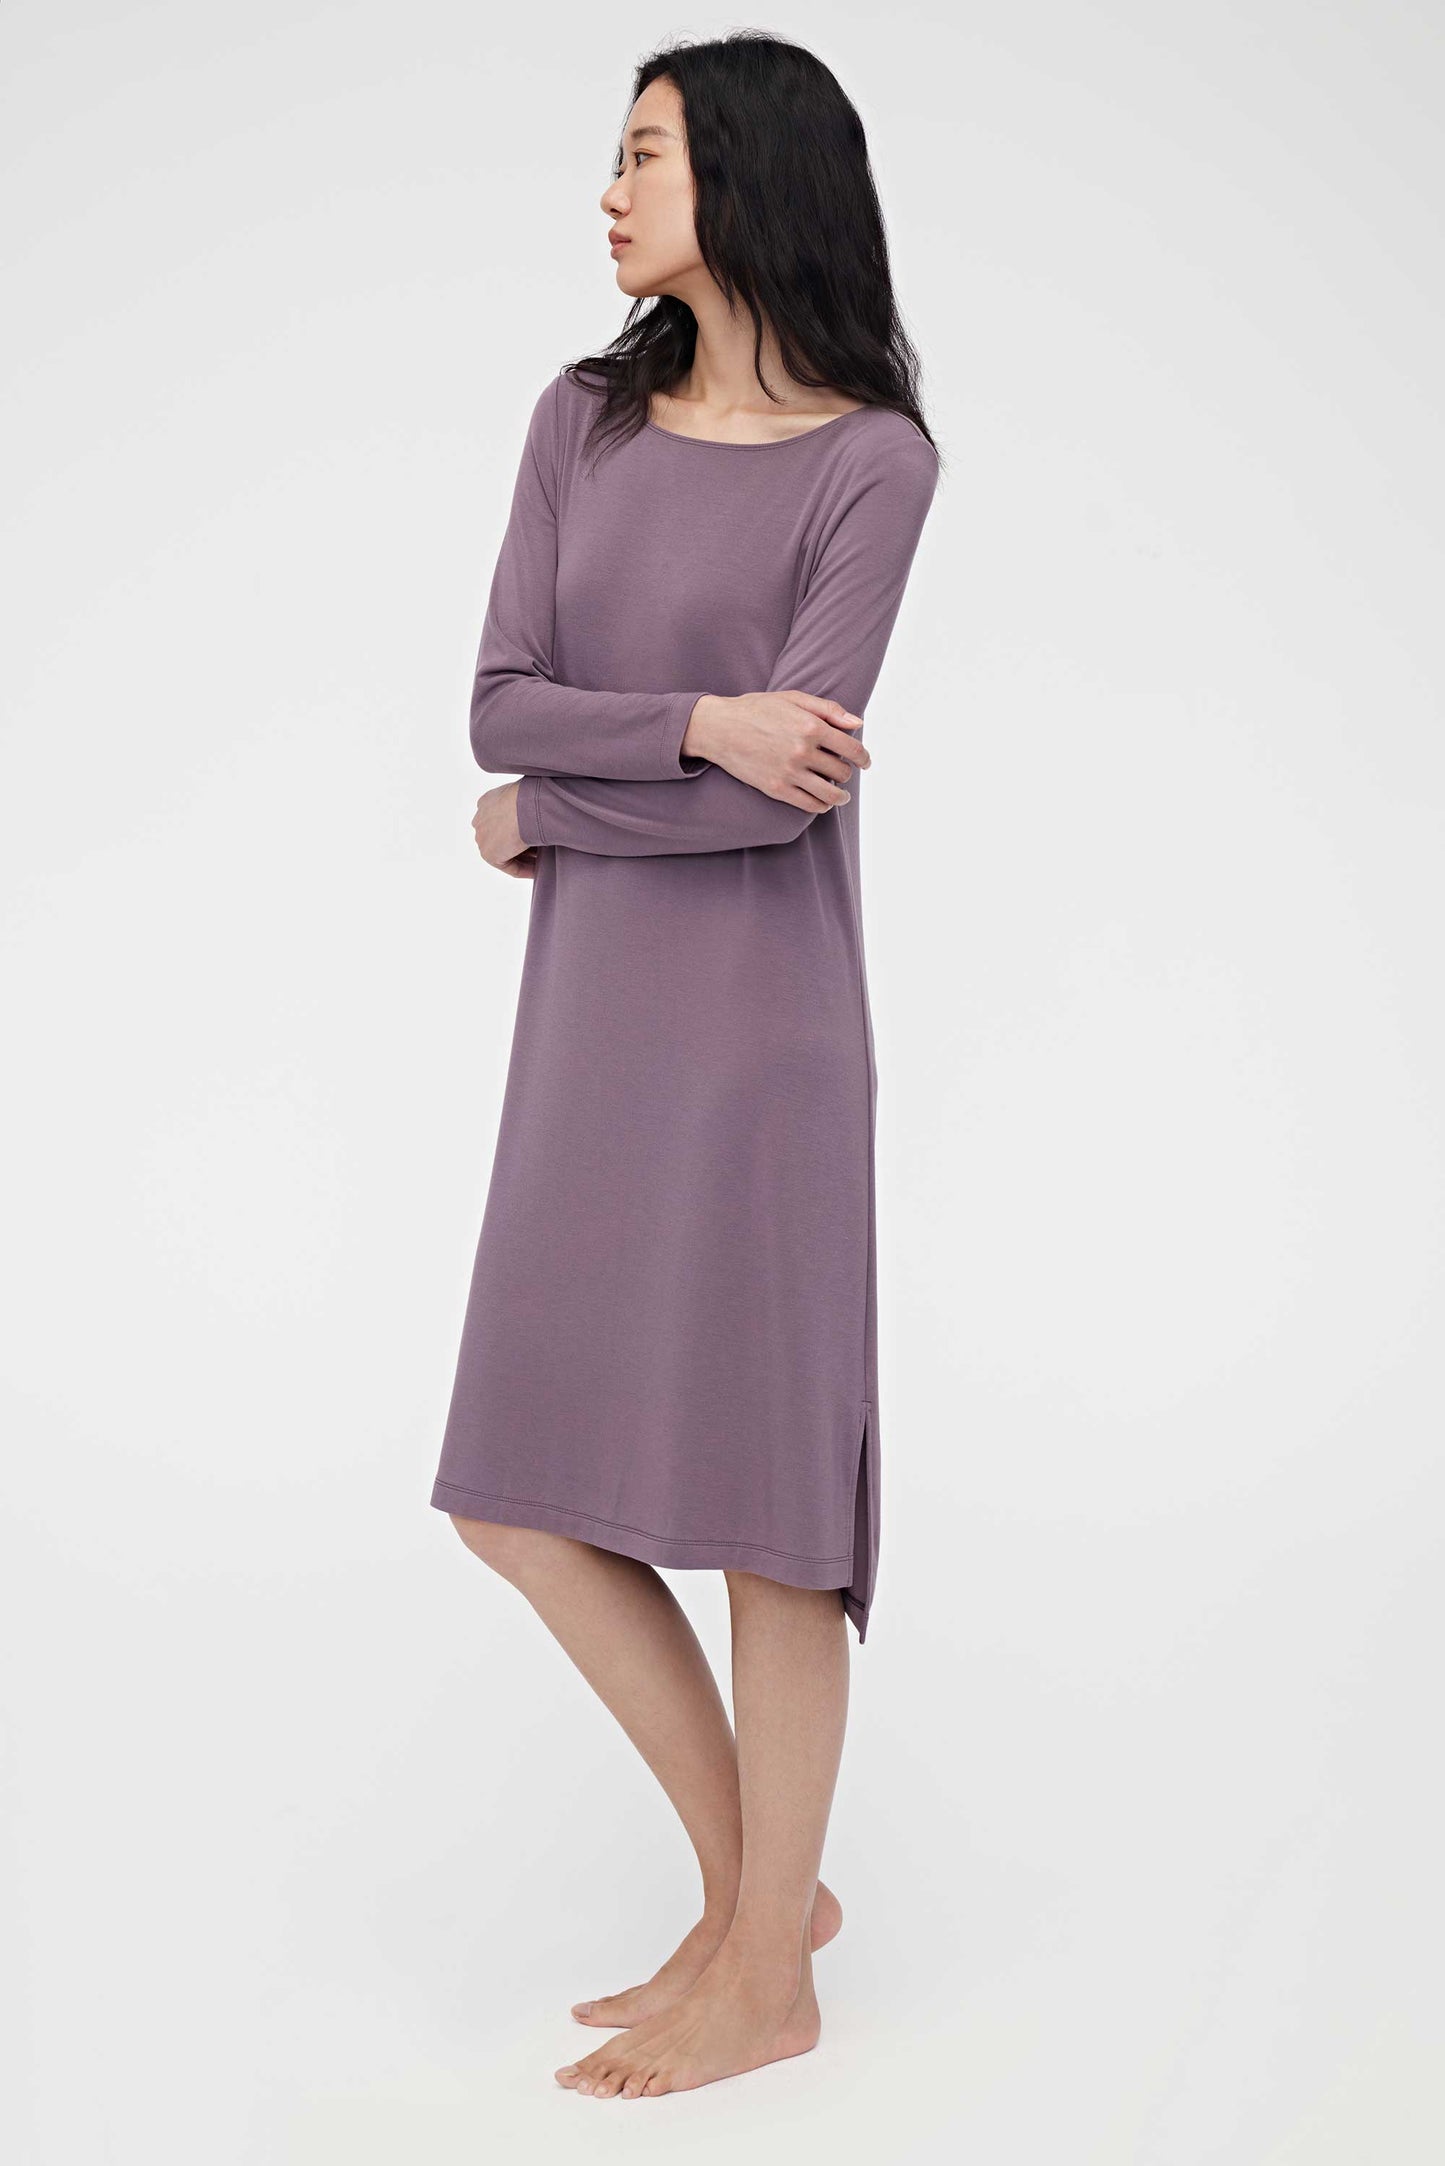 Woman wearing purple pajama dress and facing left